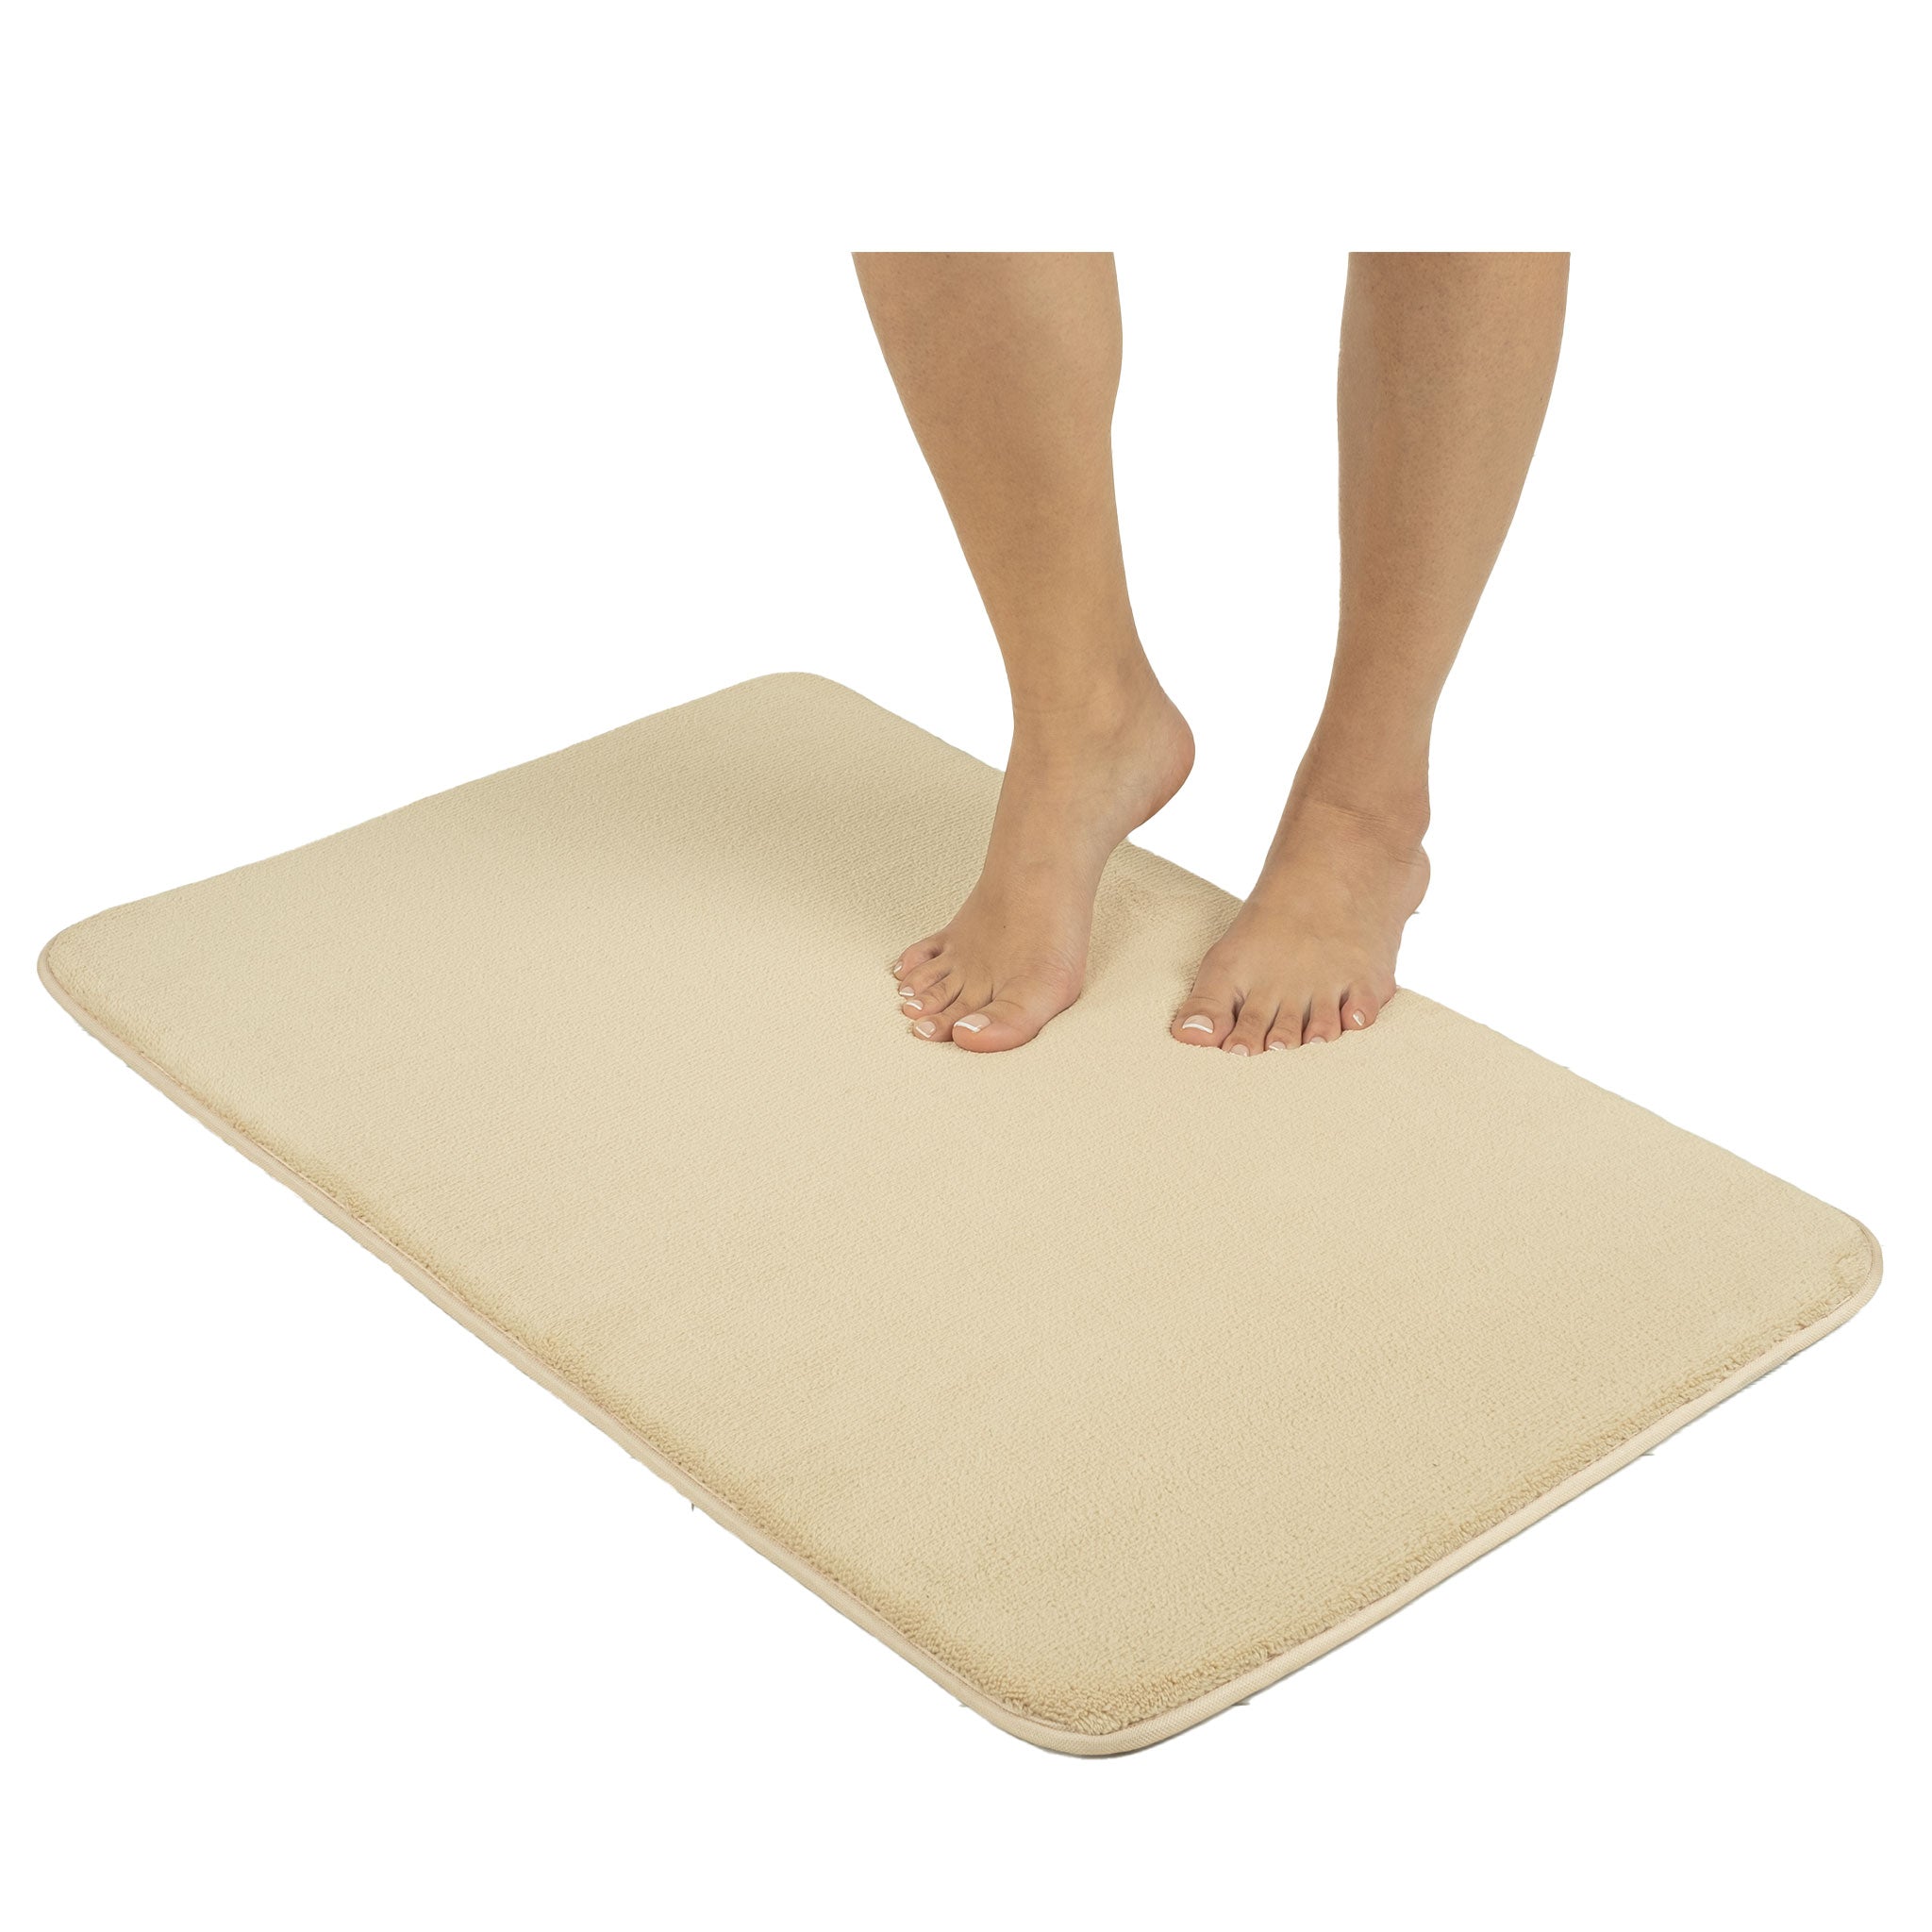 American Soft Linen - Fluffy Foamed Non-Slip Bath Rug-21x32 Inch - Sand-Taupe - 1